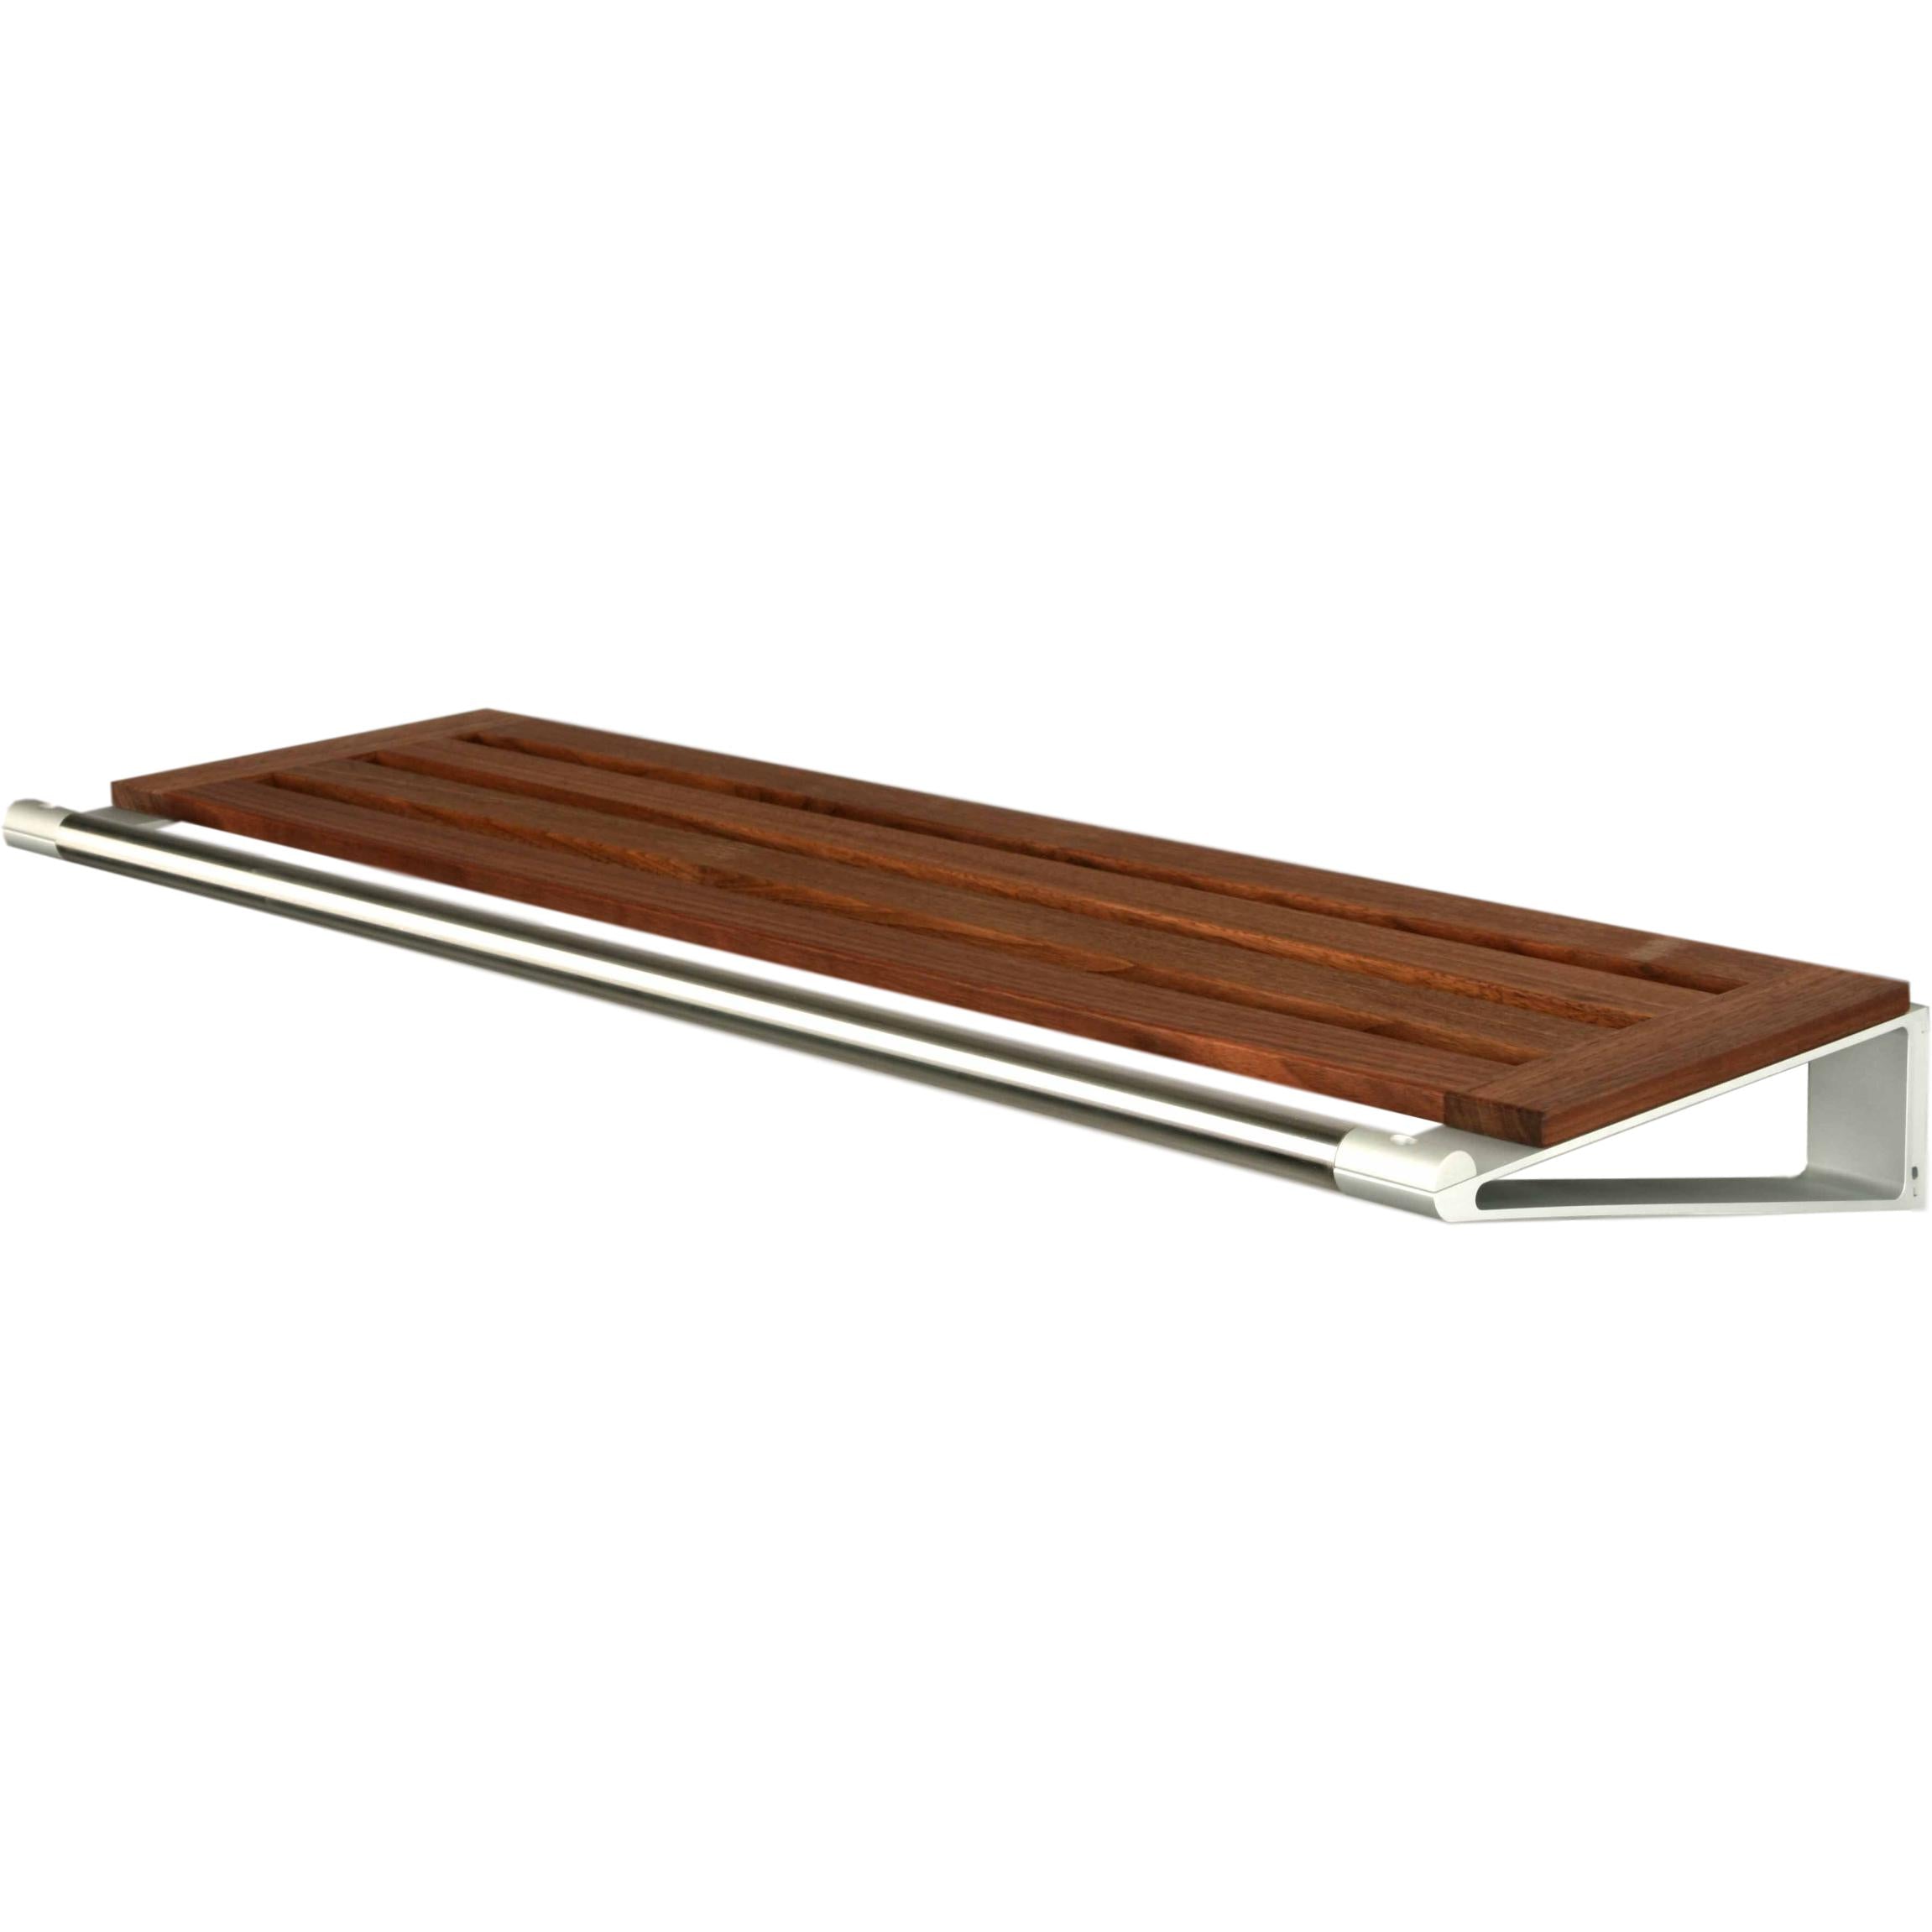 Loca Knax hoedplank 60 cm, walnoot/aluminium